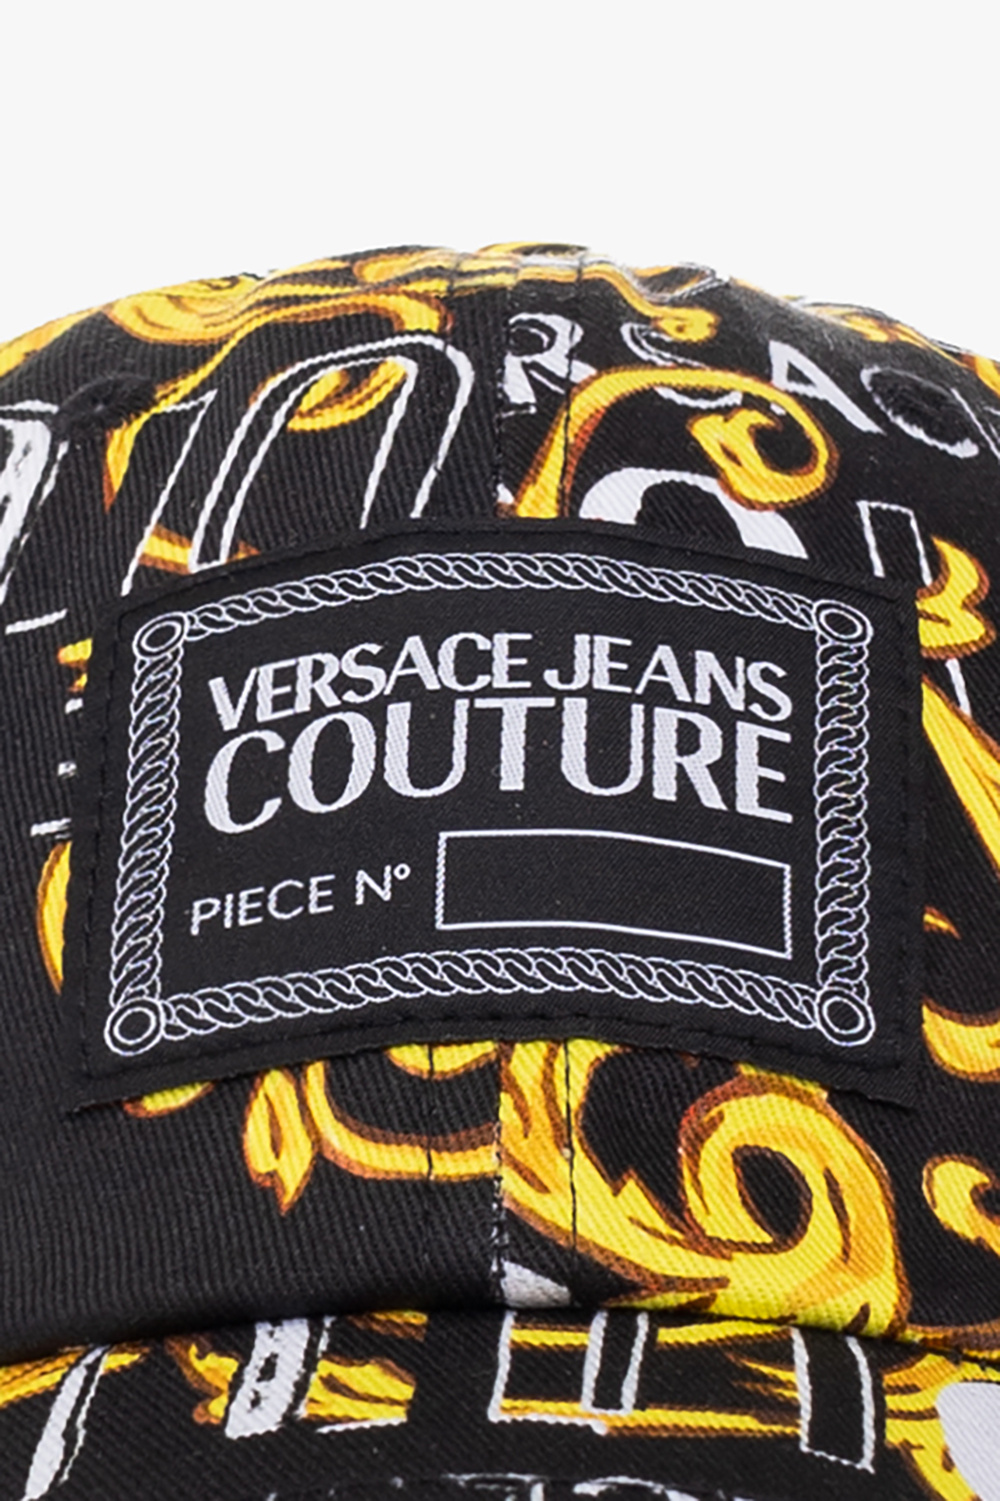 Versace Jeans Couture clothing caps 5 women wallets